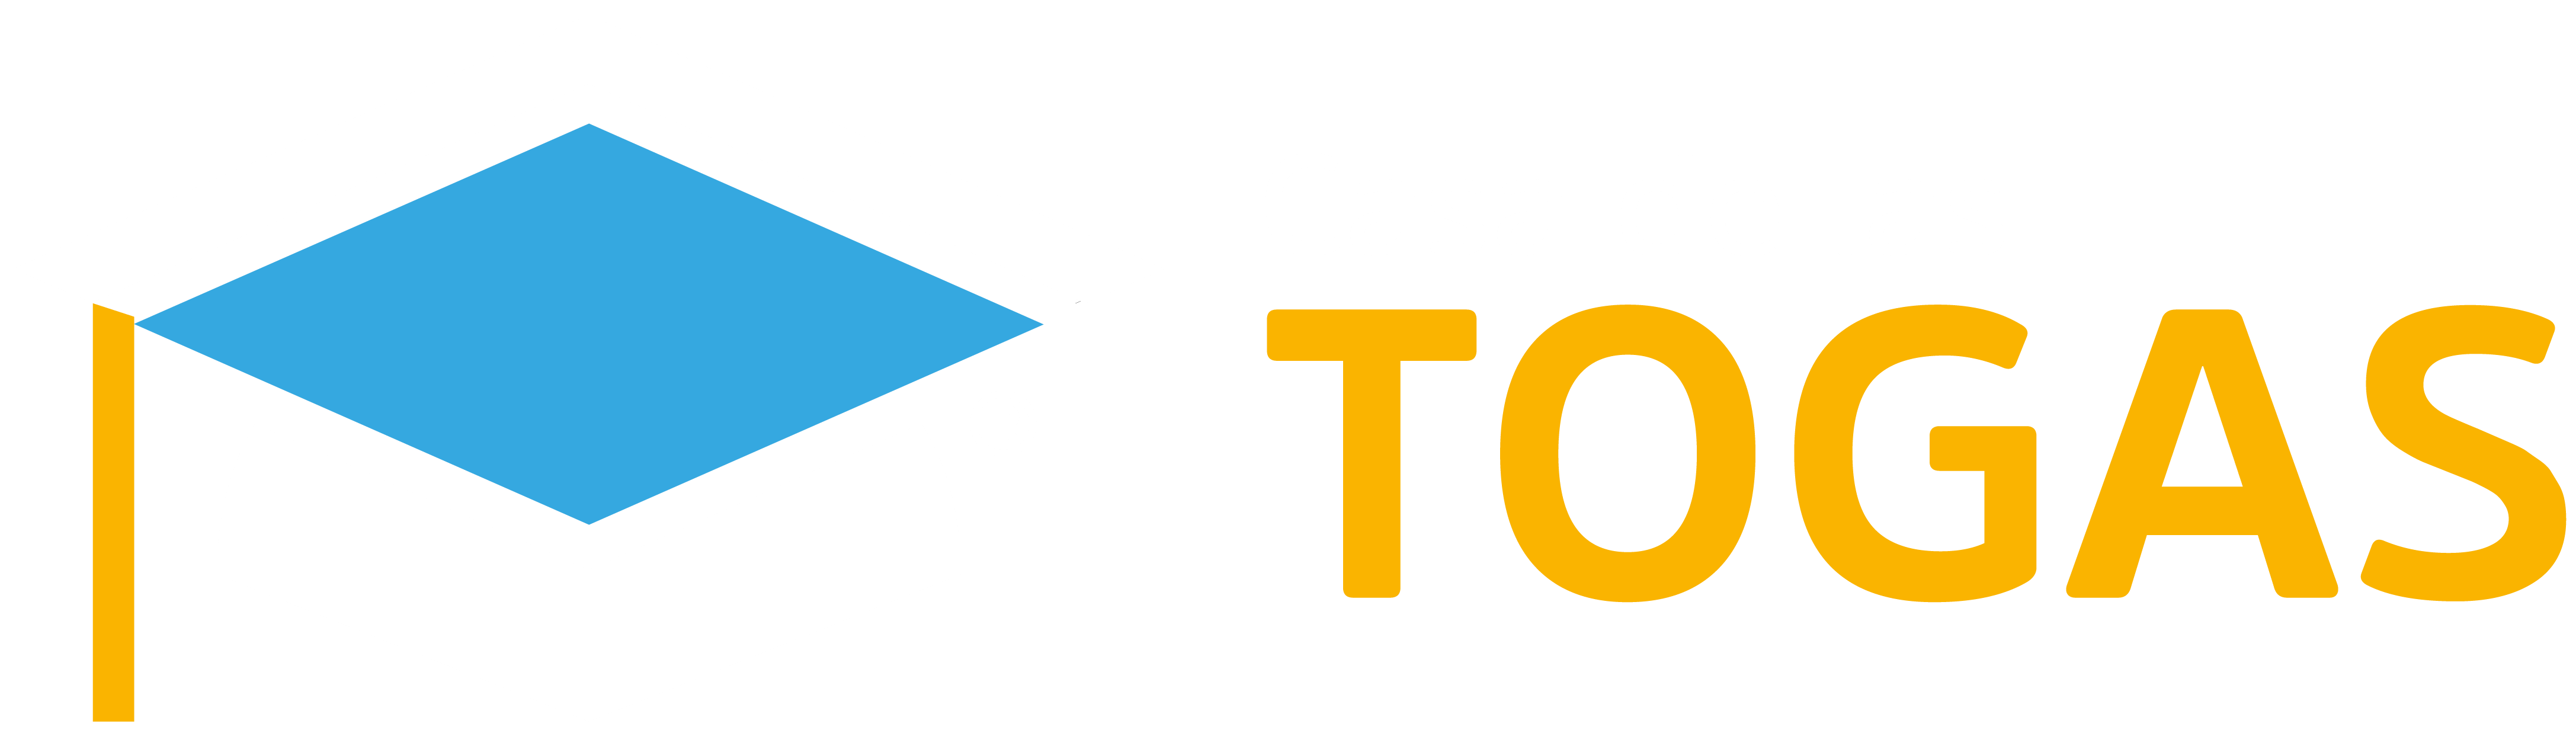 Casa de las Togas Guatemala